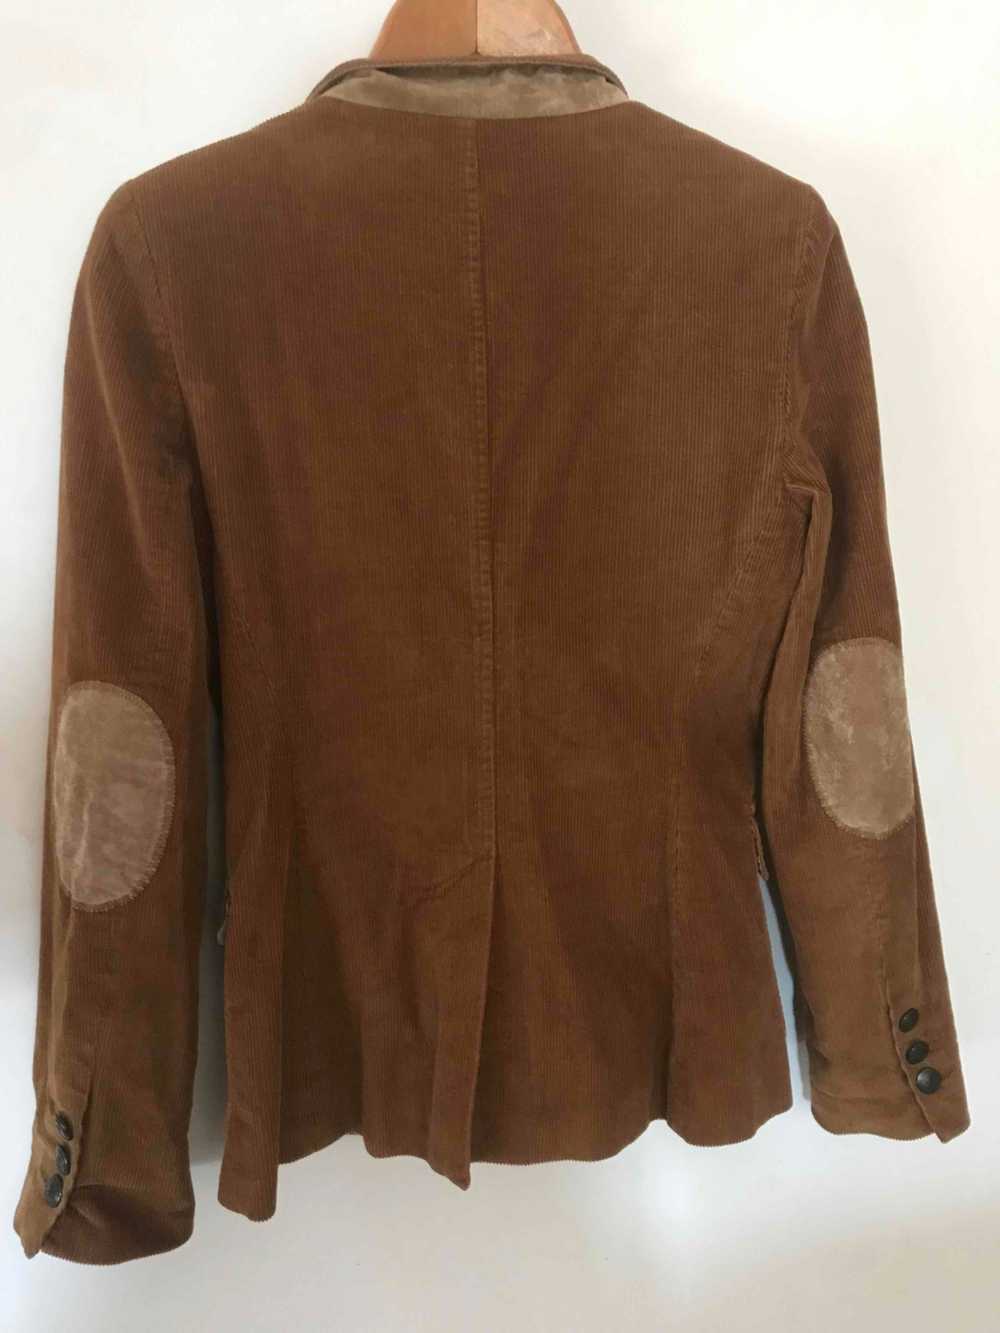 Corduroy blazer - Camel corduroy jacket - image 2